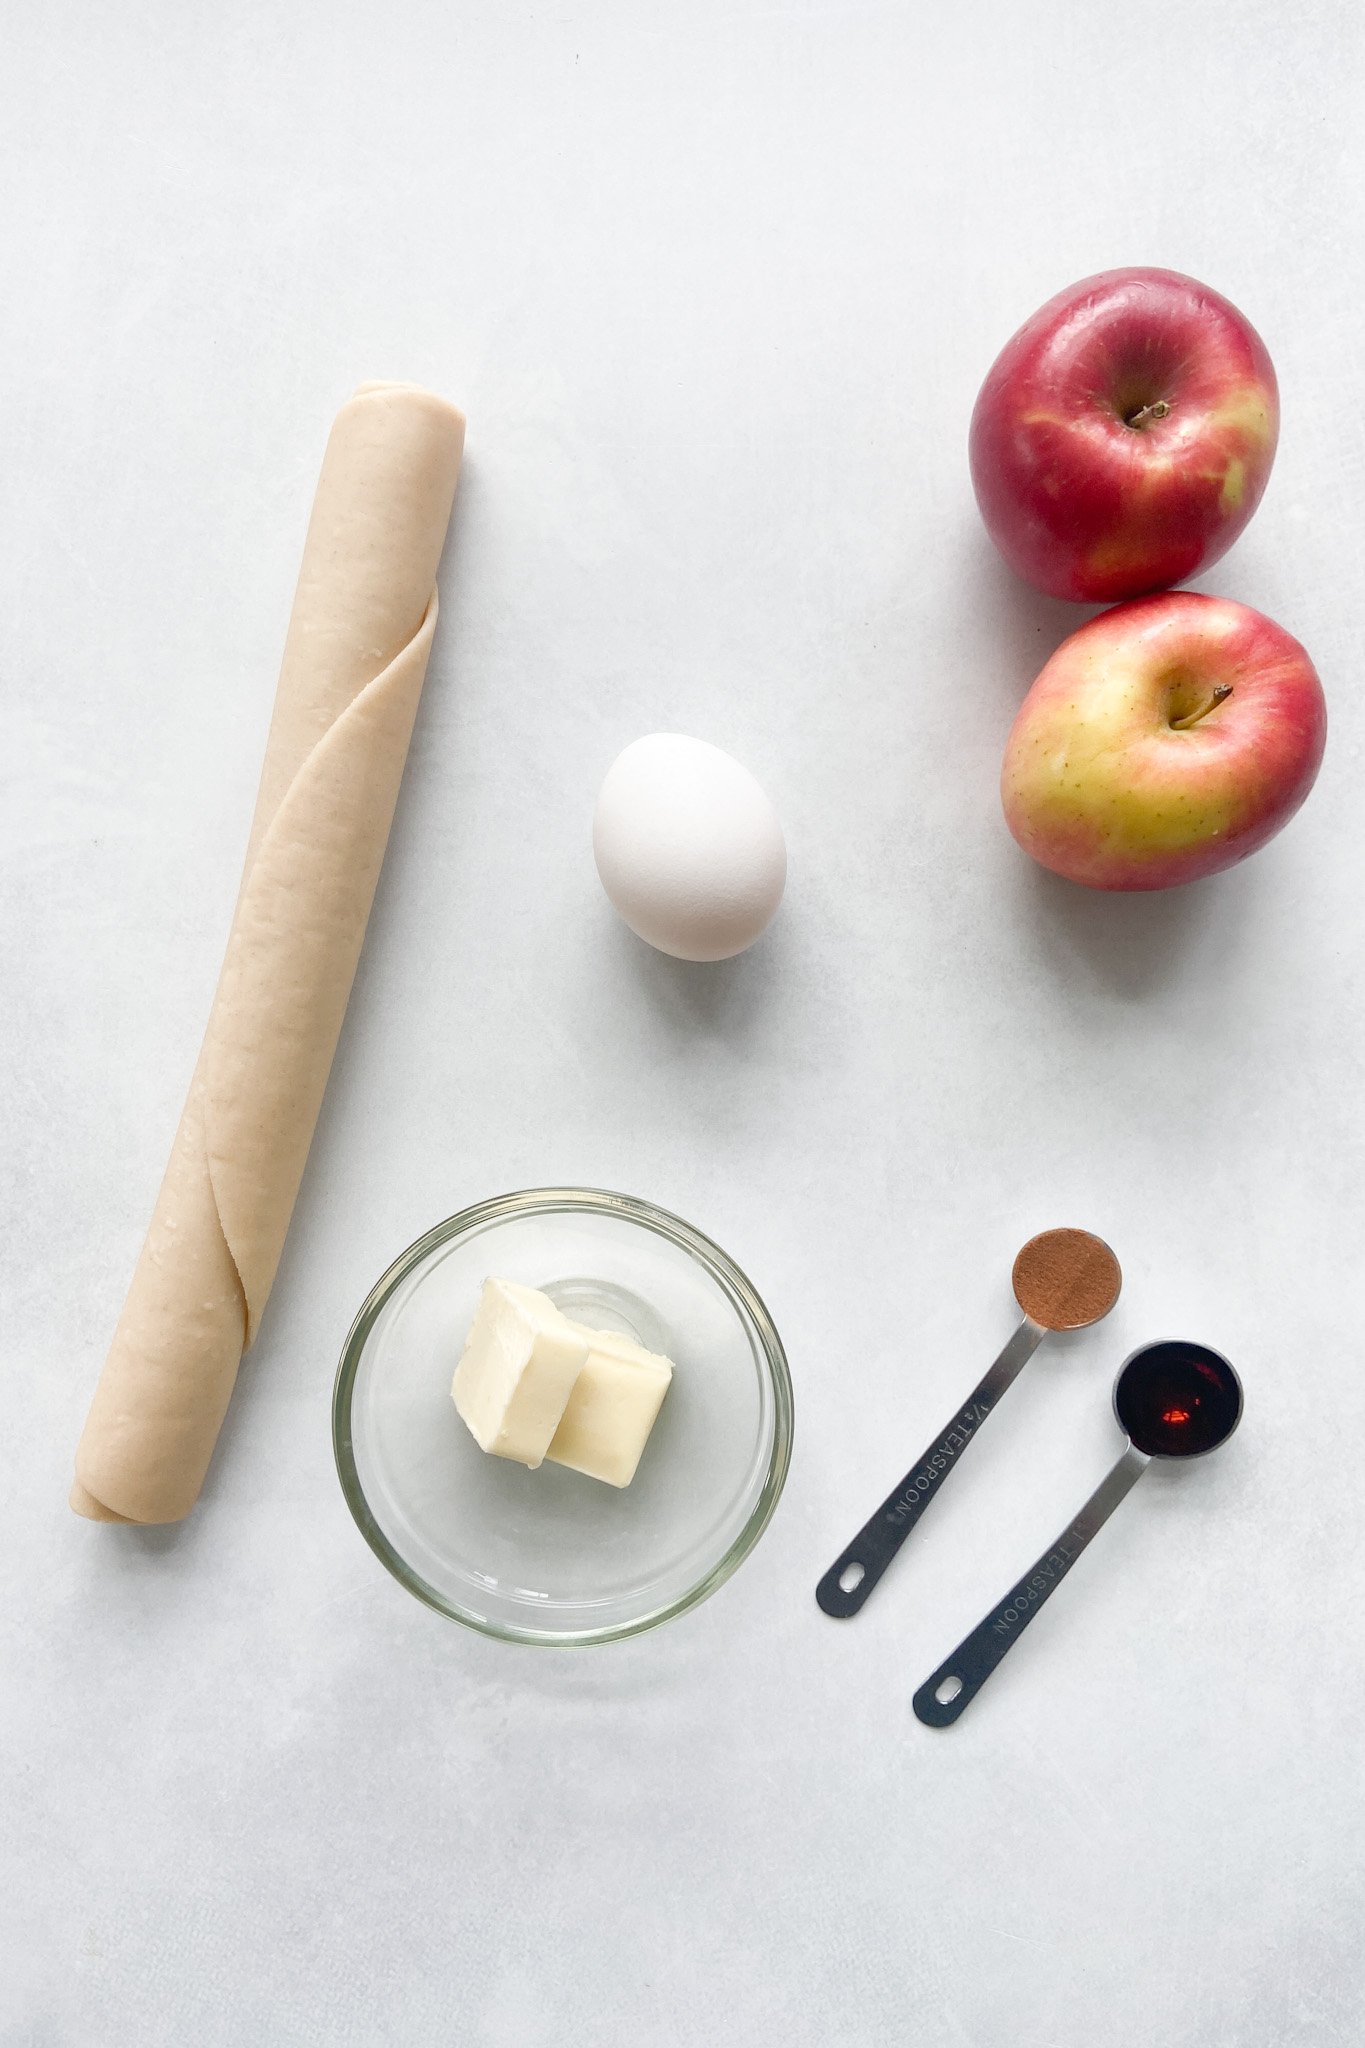 Ingredients to make healthy mini apple pies